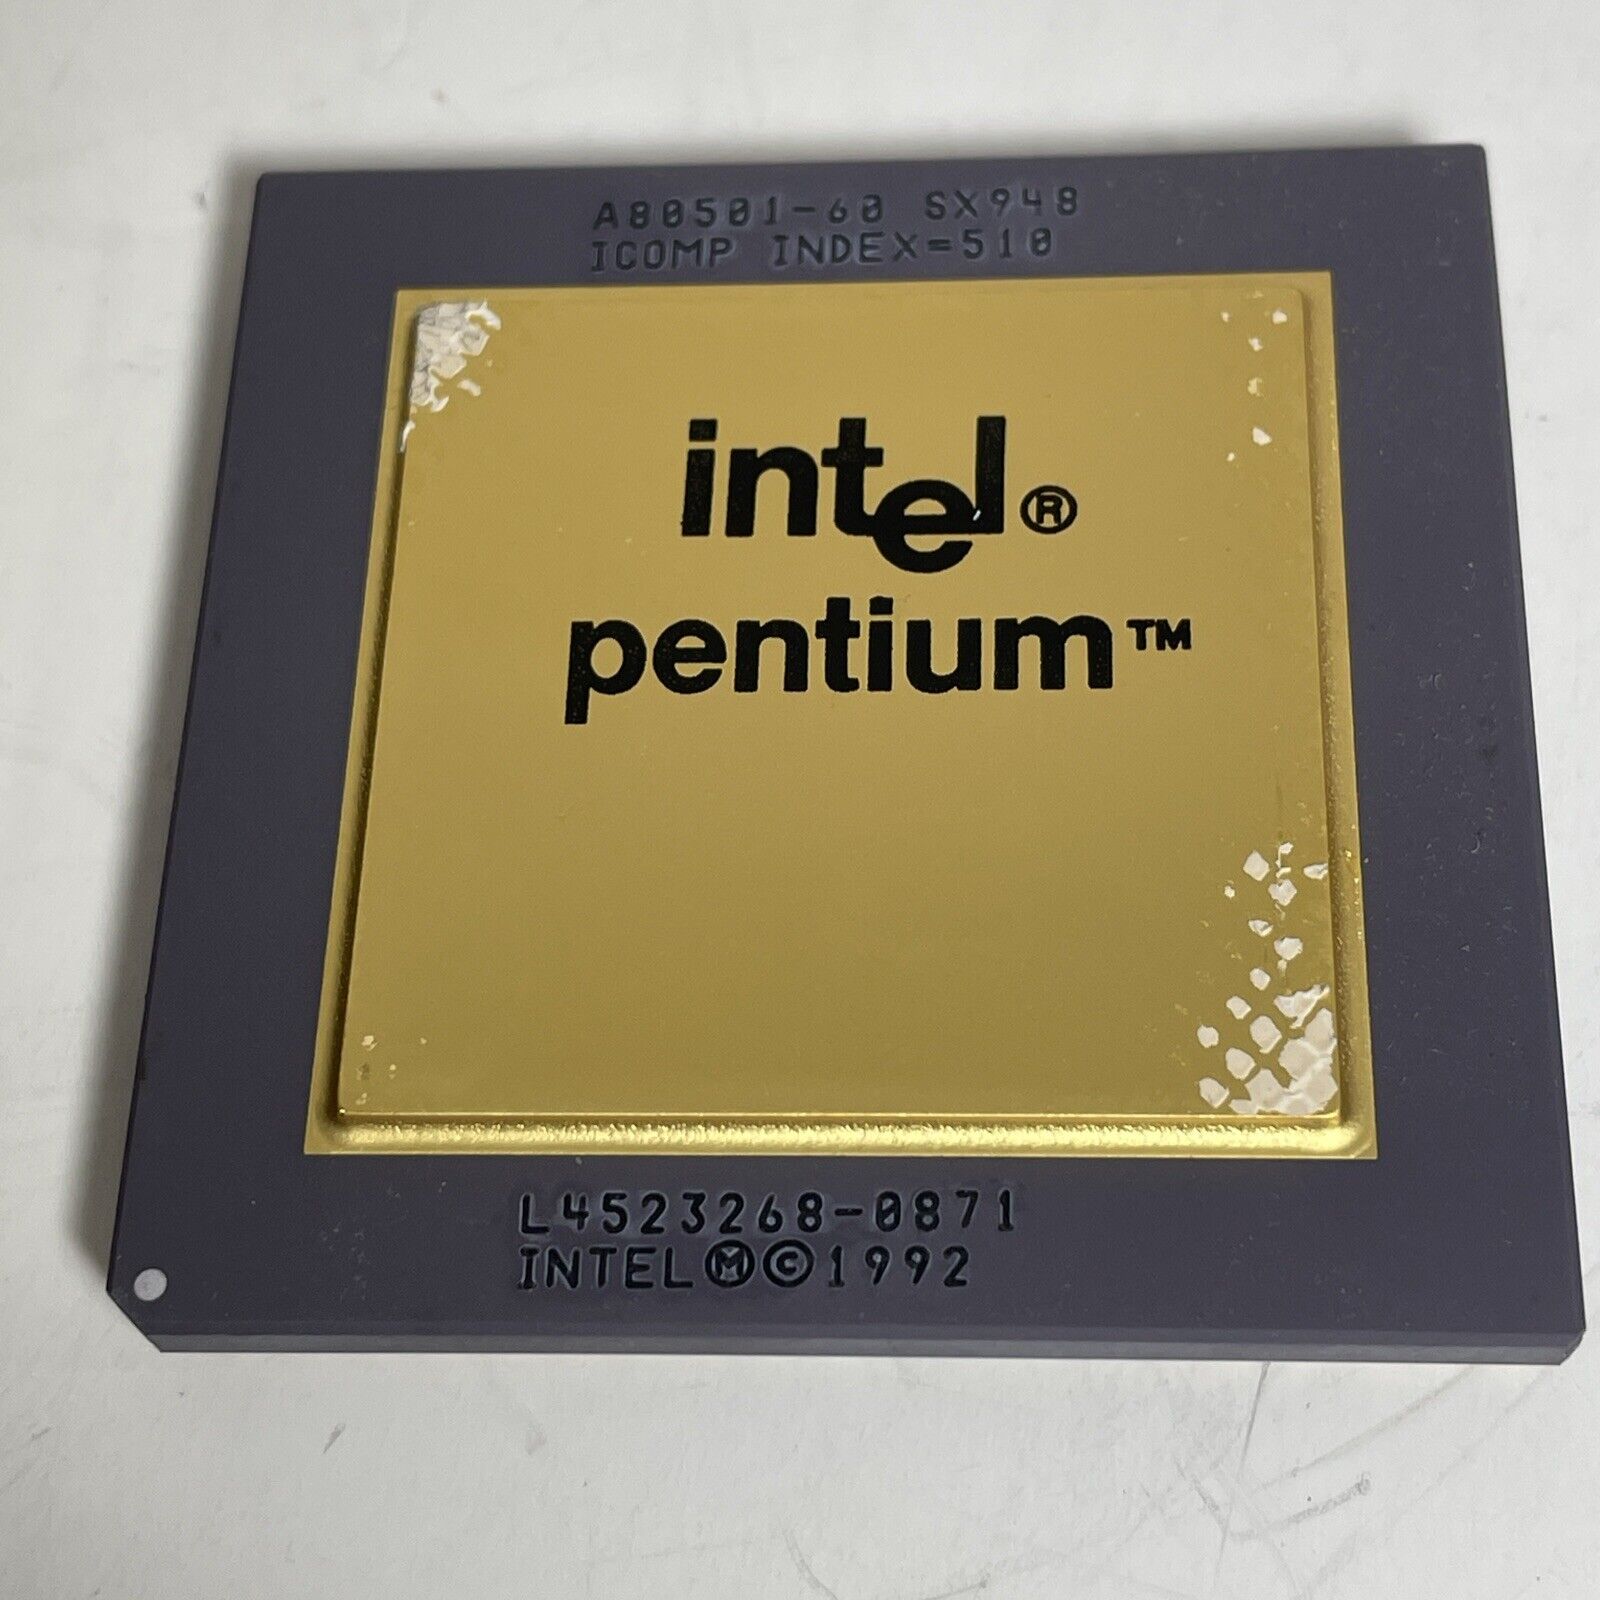 Vintage 1992 Intel Pentium 60 MHz CPU P60 A80501-60 SX948 Gold Top Processor